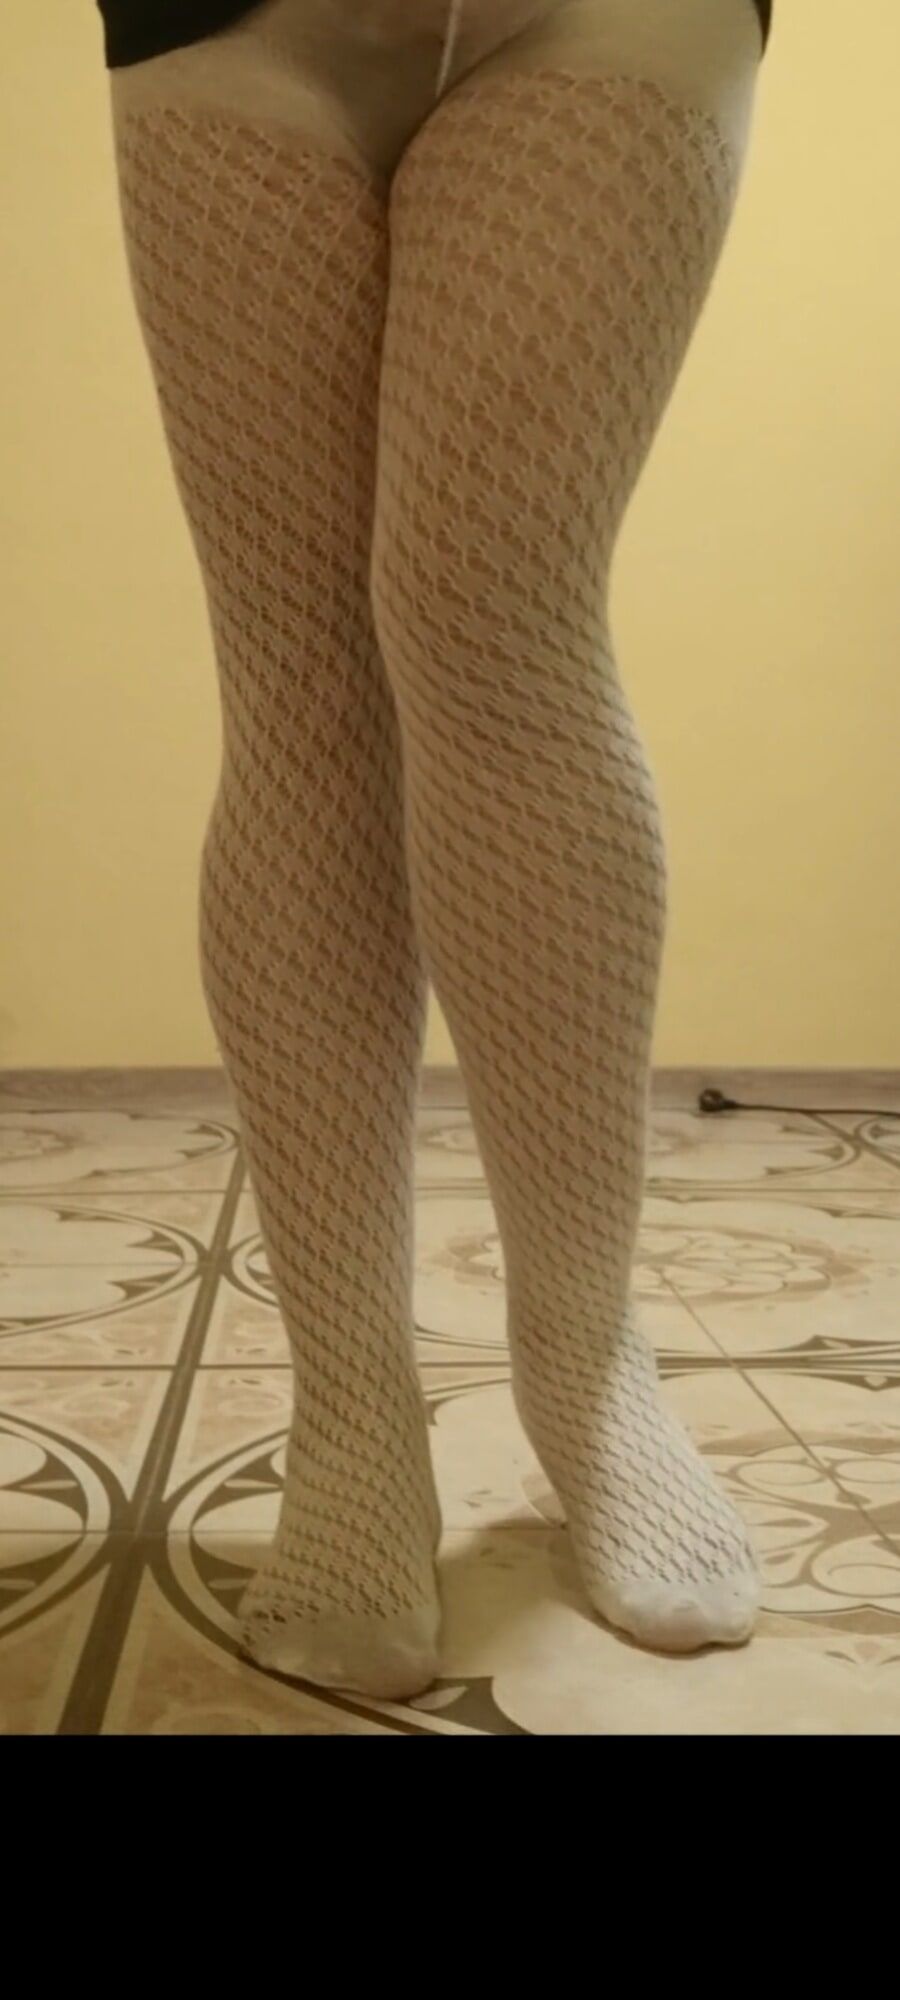 Pantyhose patterned #25